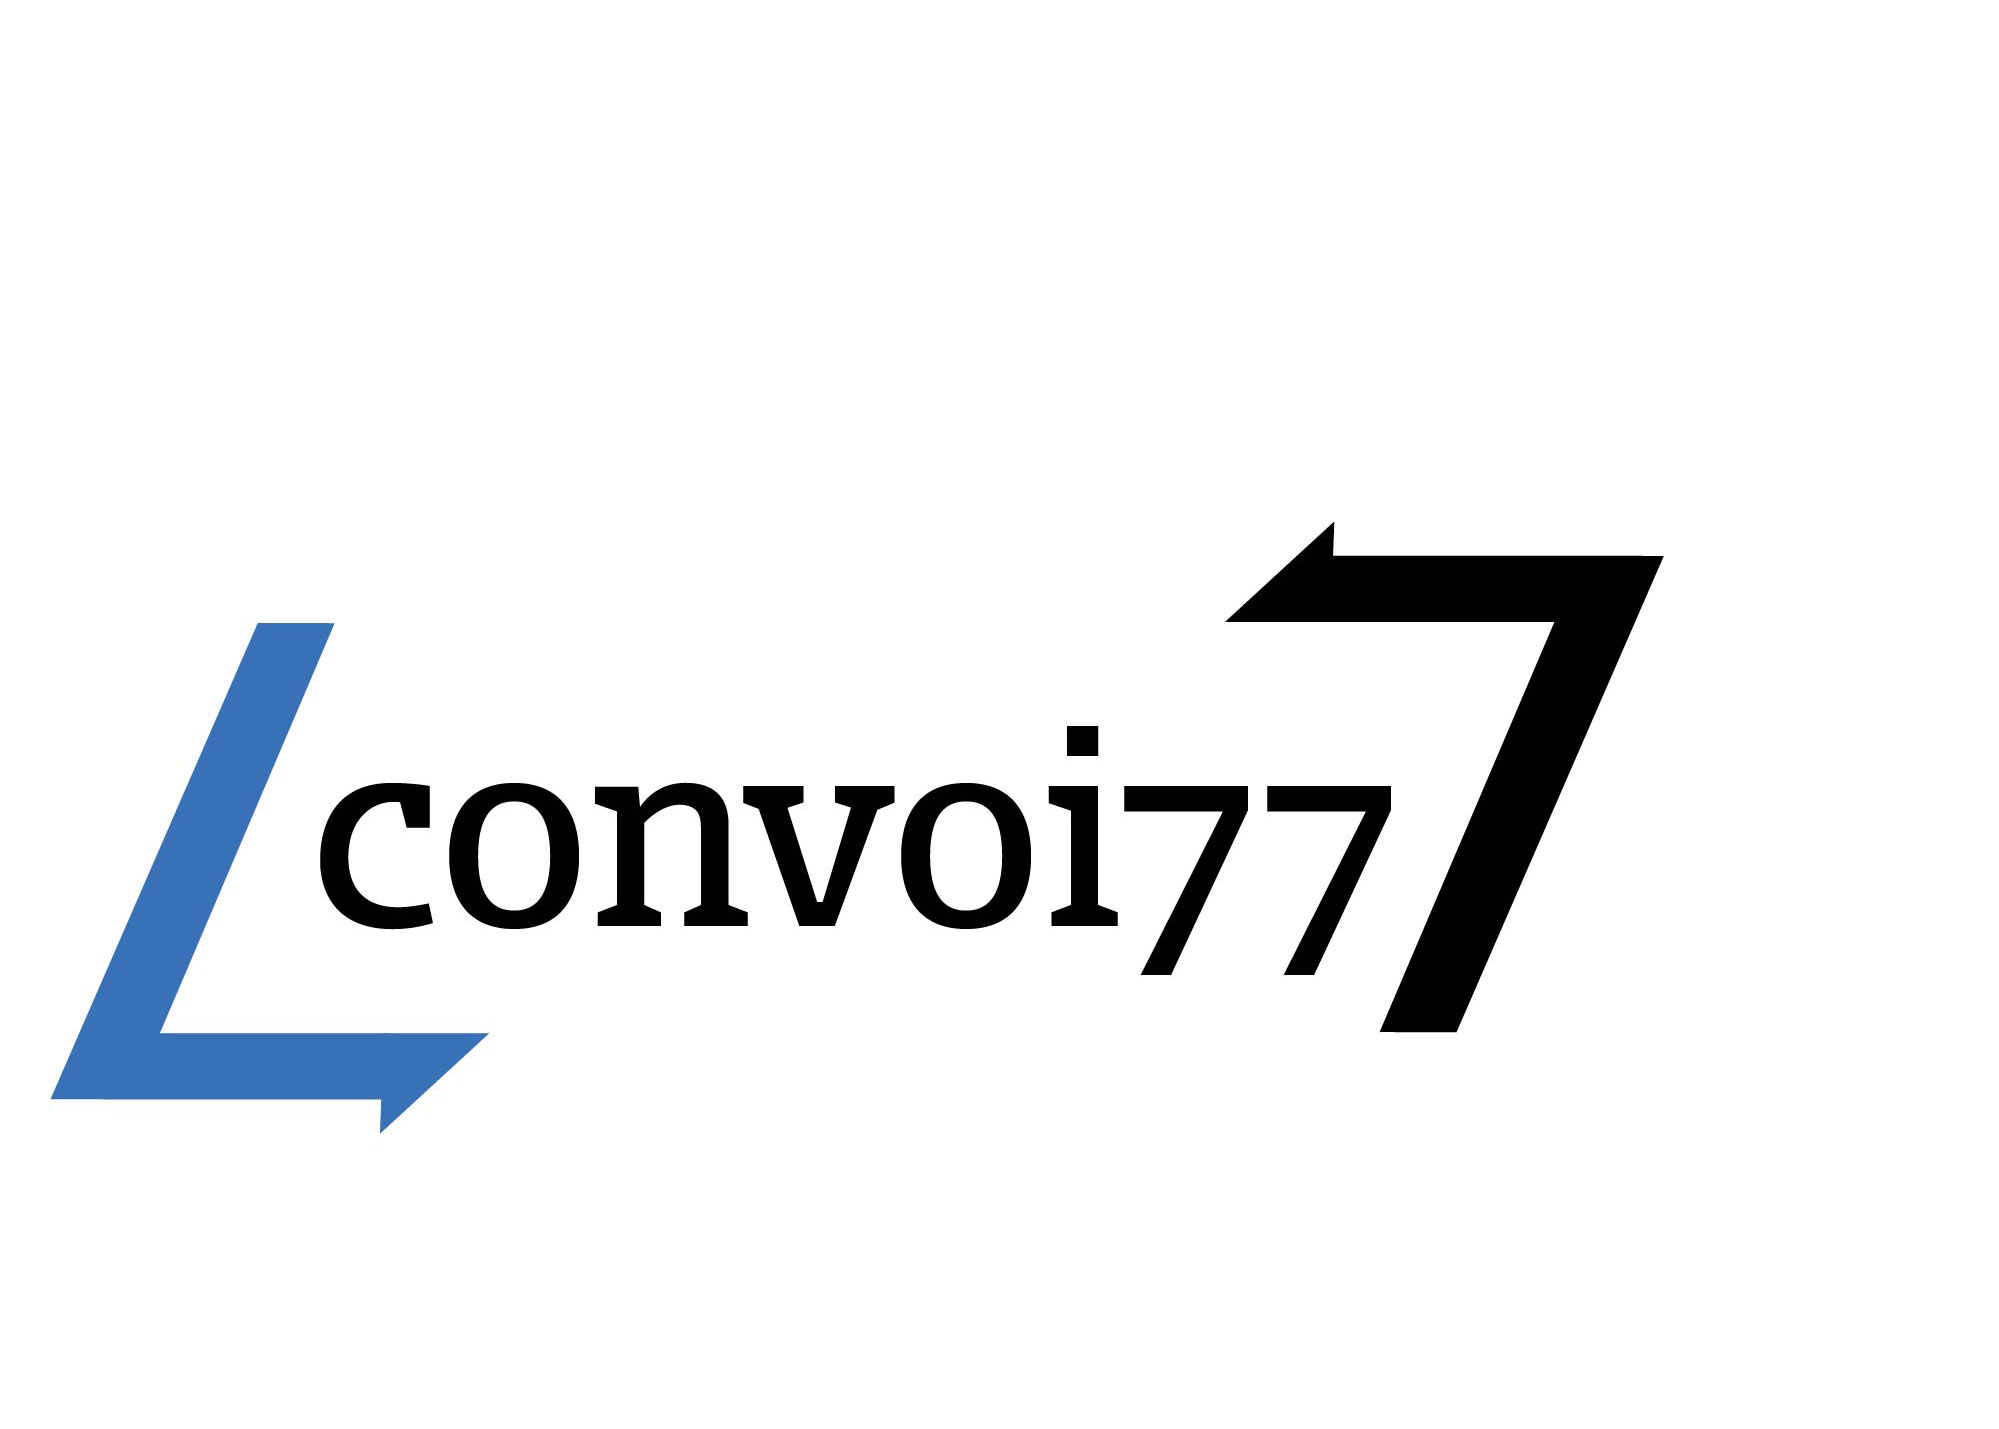 Convoi 77